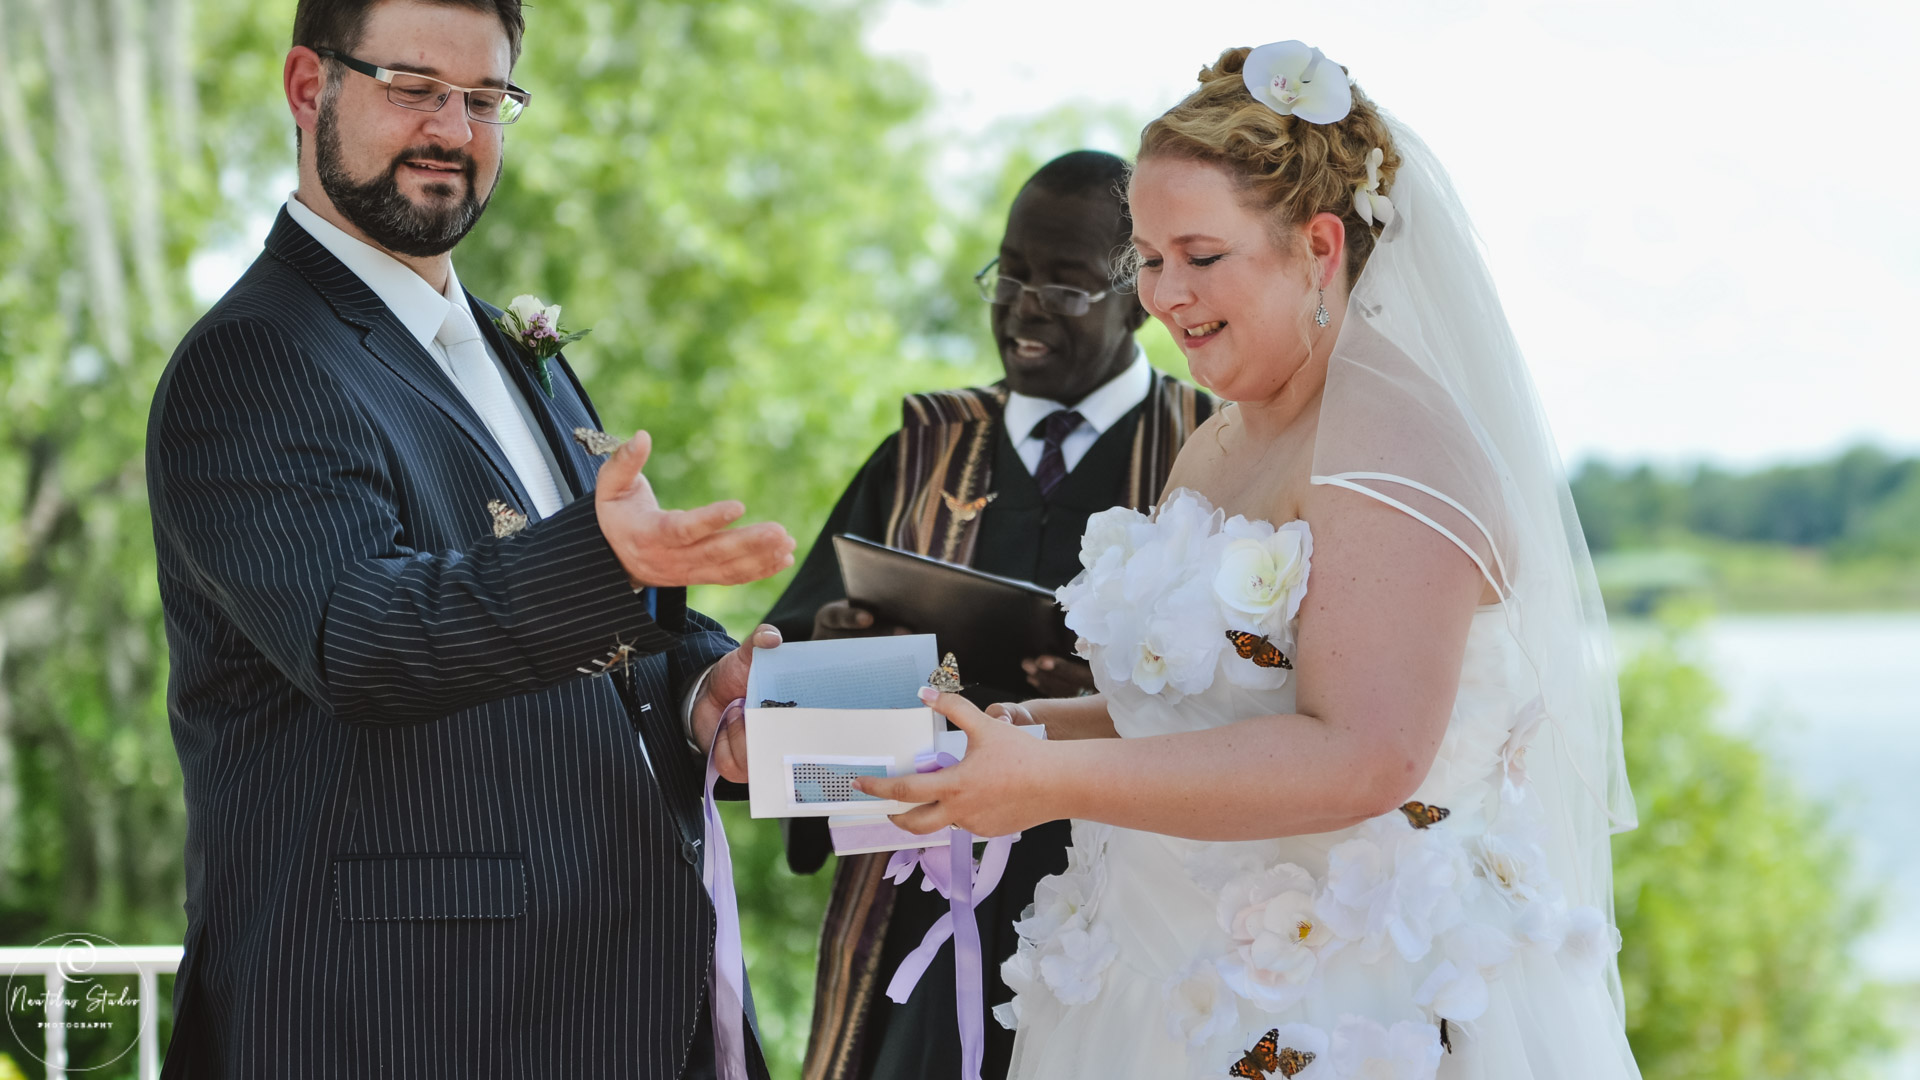 Wedding couple releasing butterflies